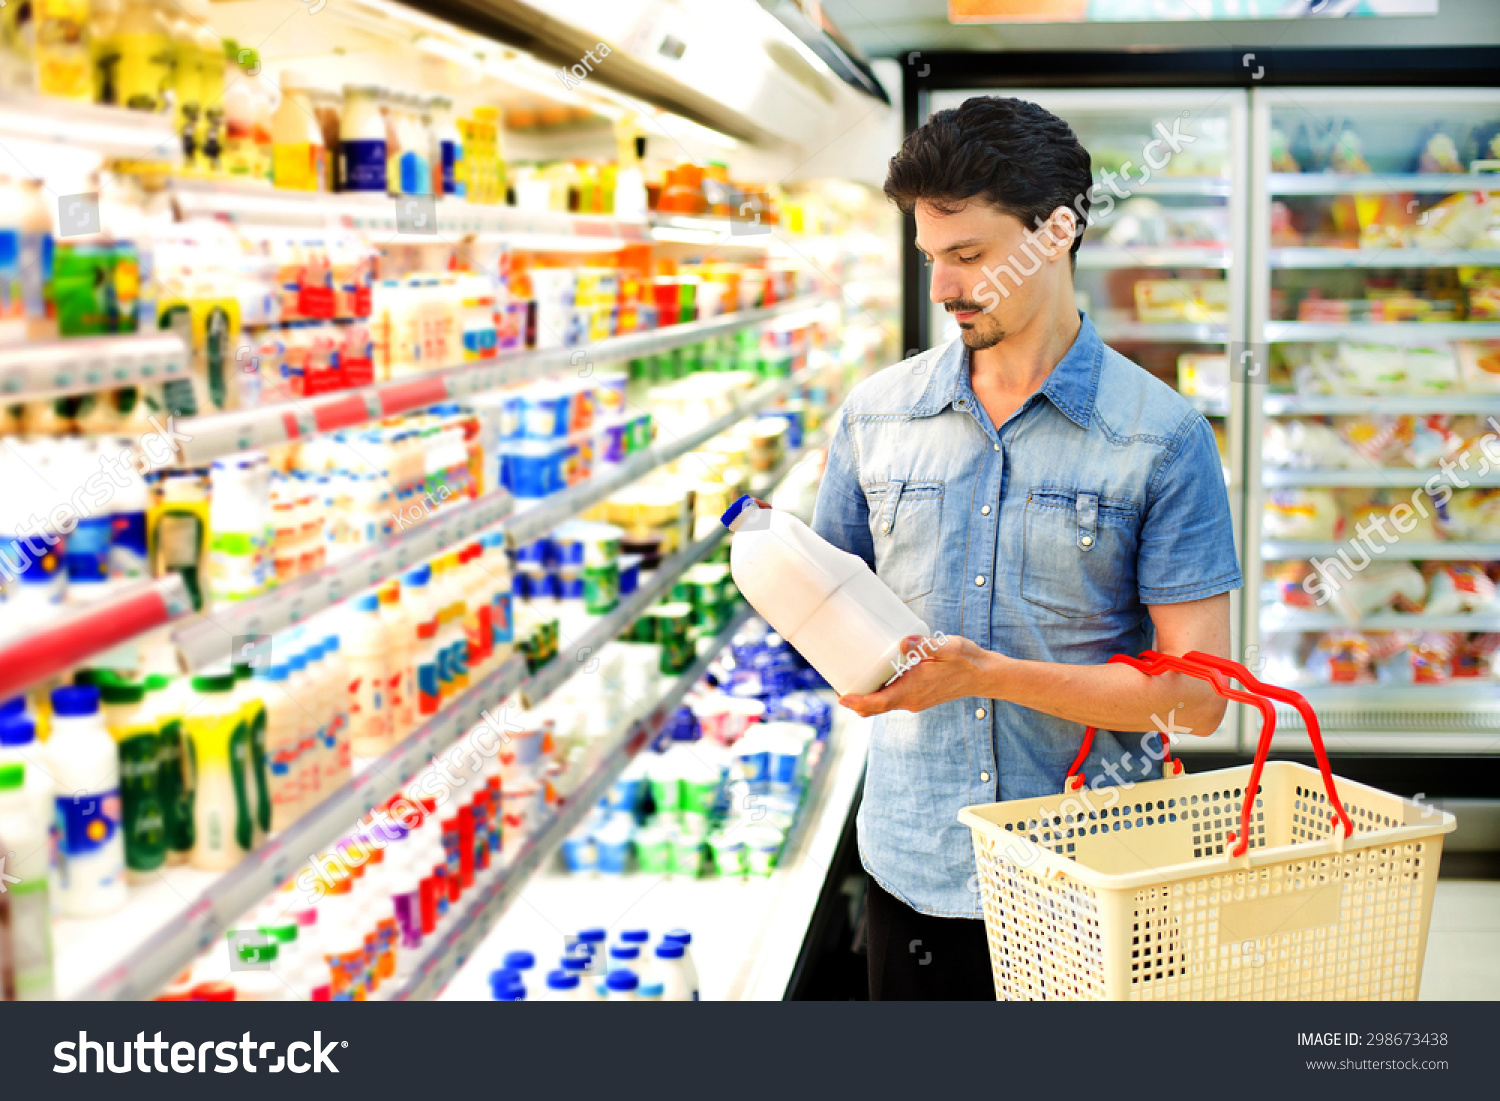 Man Buys Milk At The Supermarket Stock Photo 298673438 : Shutterstock